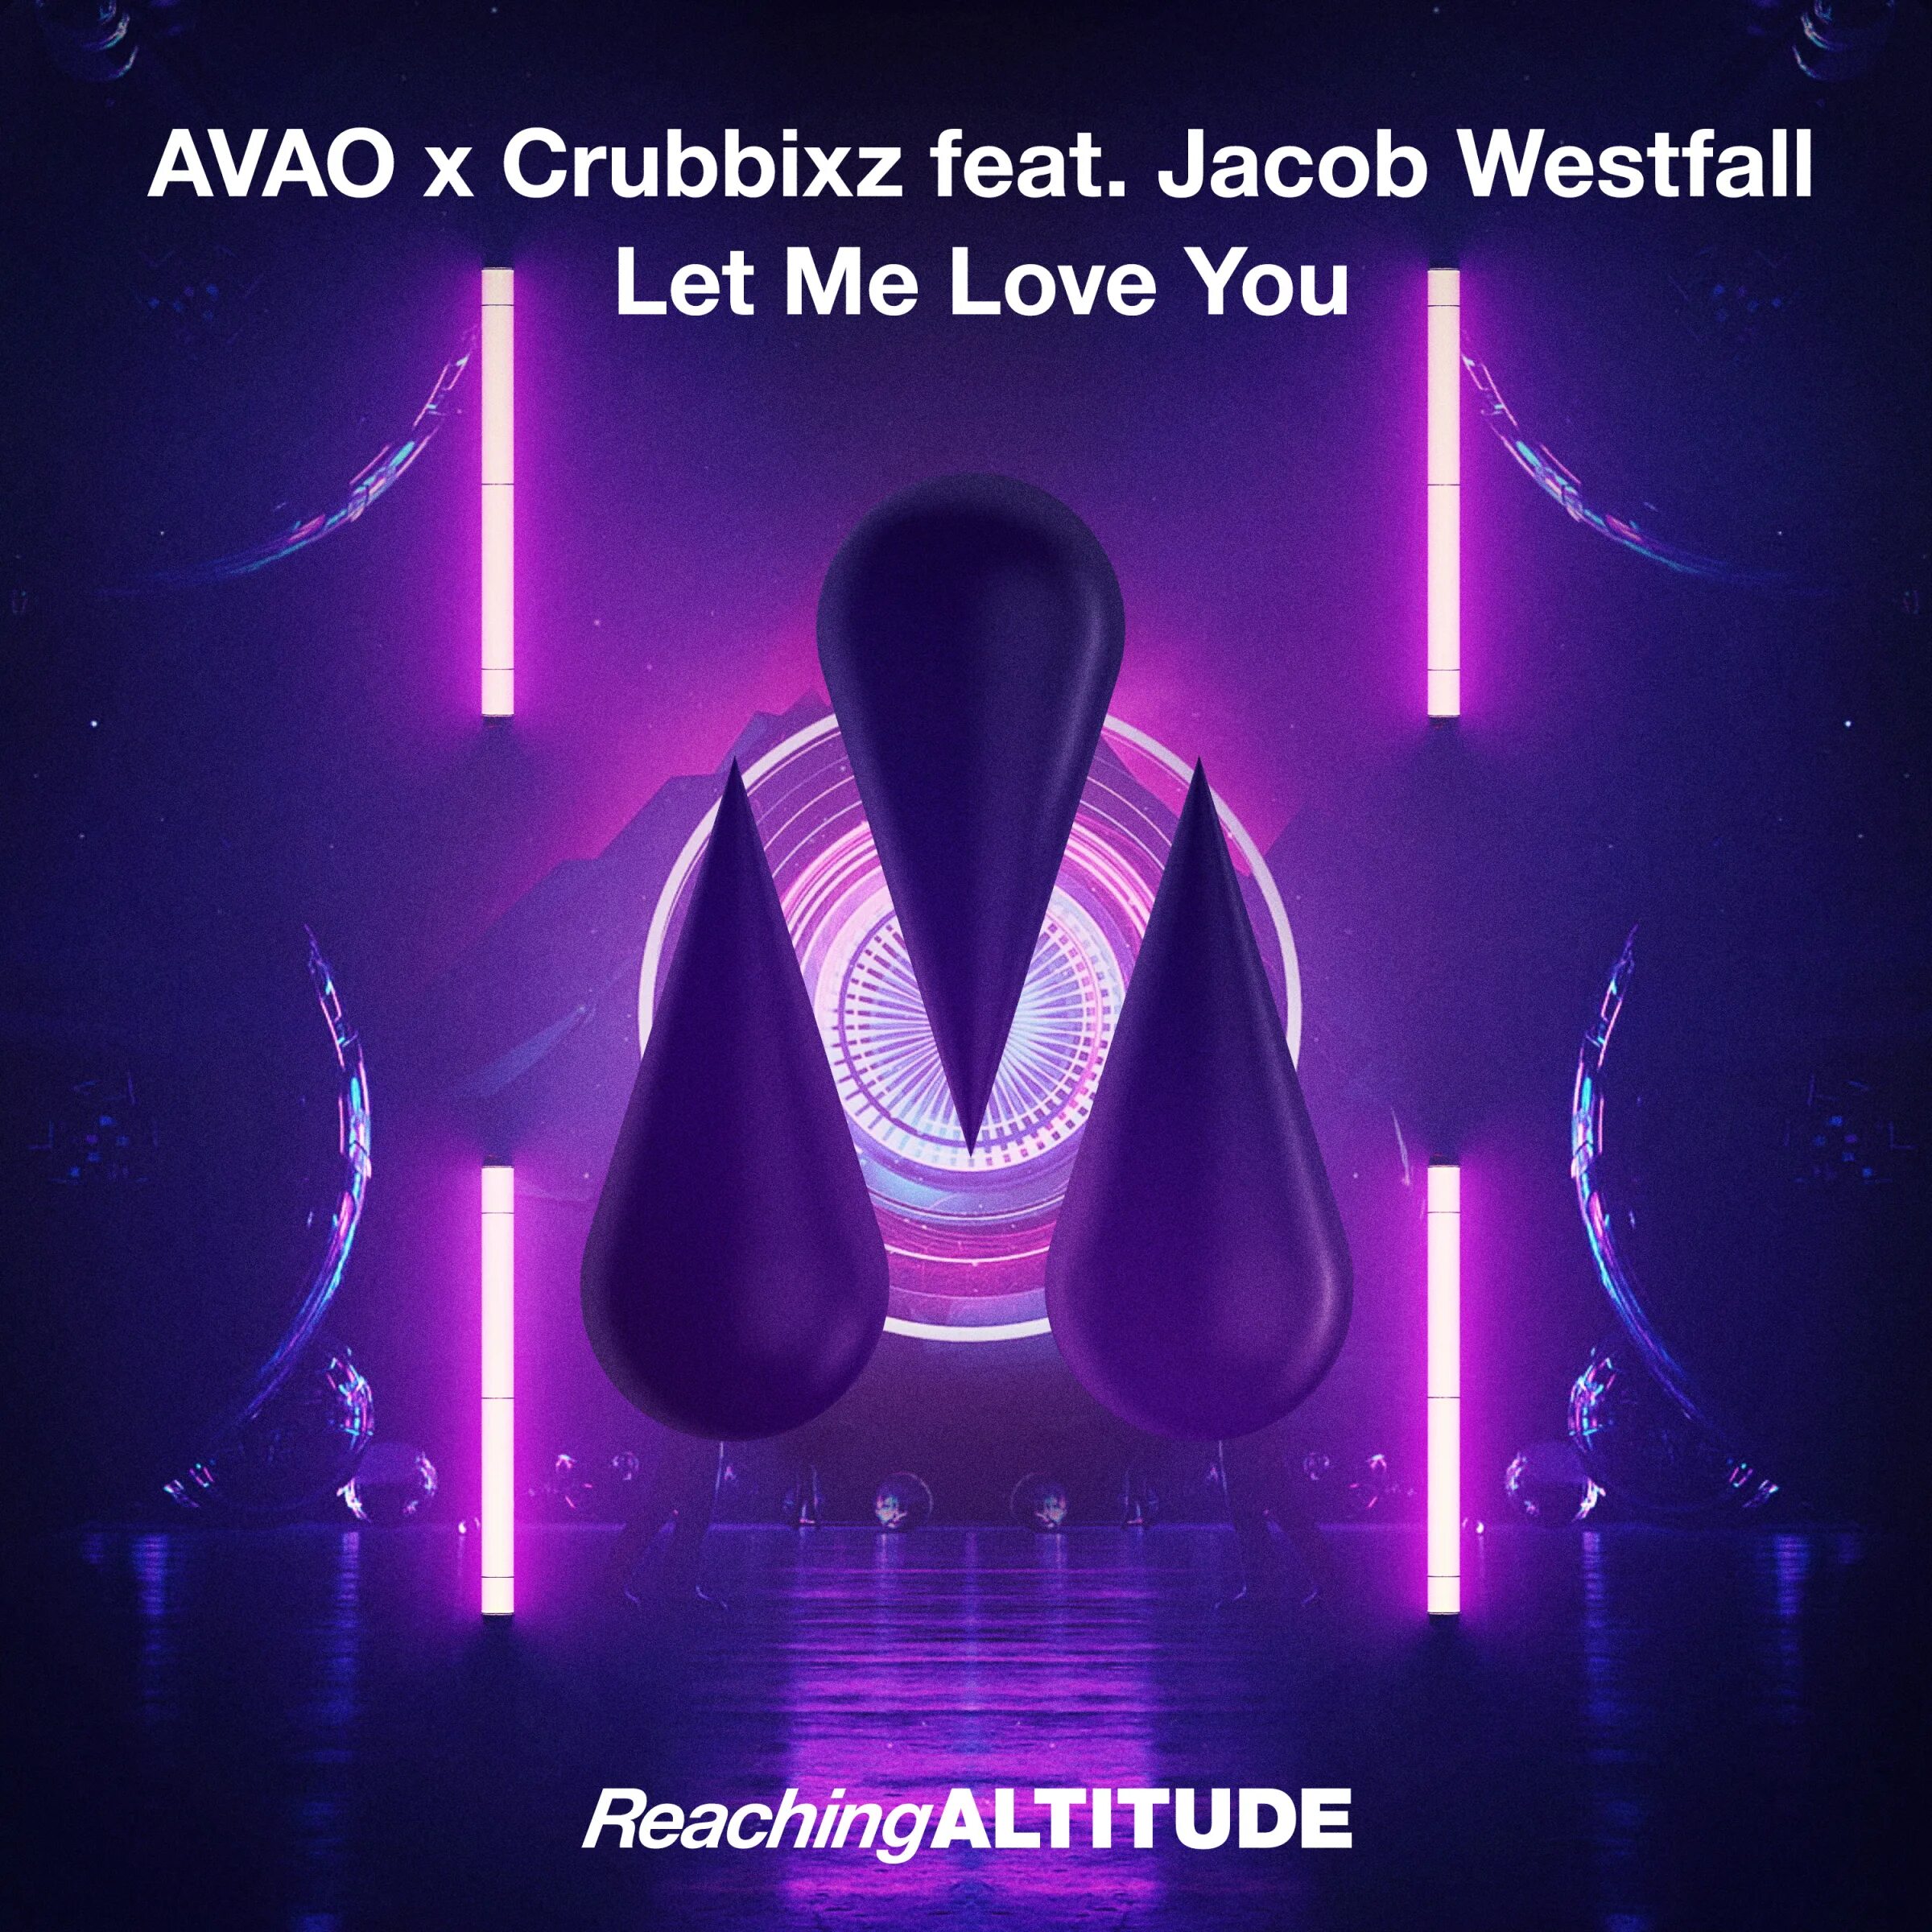 Jacob feat. Avao DJ. Let me Love you. Avao - Electric. Crubbixz - Break through.